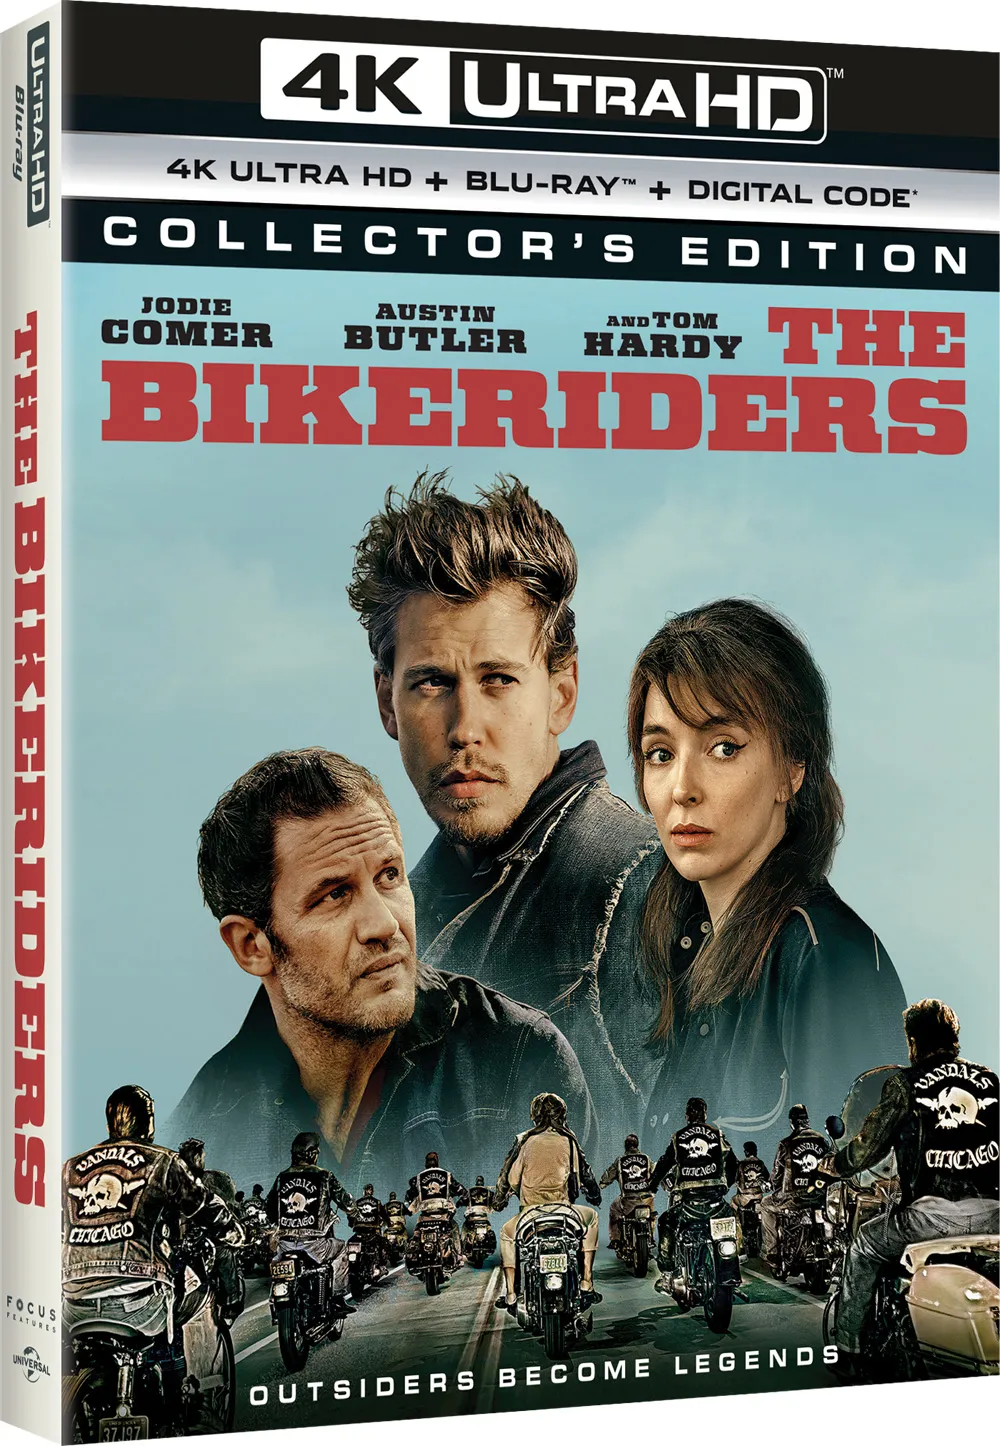 'The Bikeriders' Cruises to 4K UHD Blu-ray on August 13th